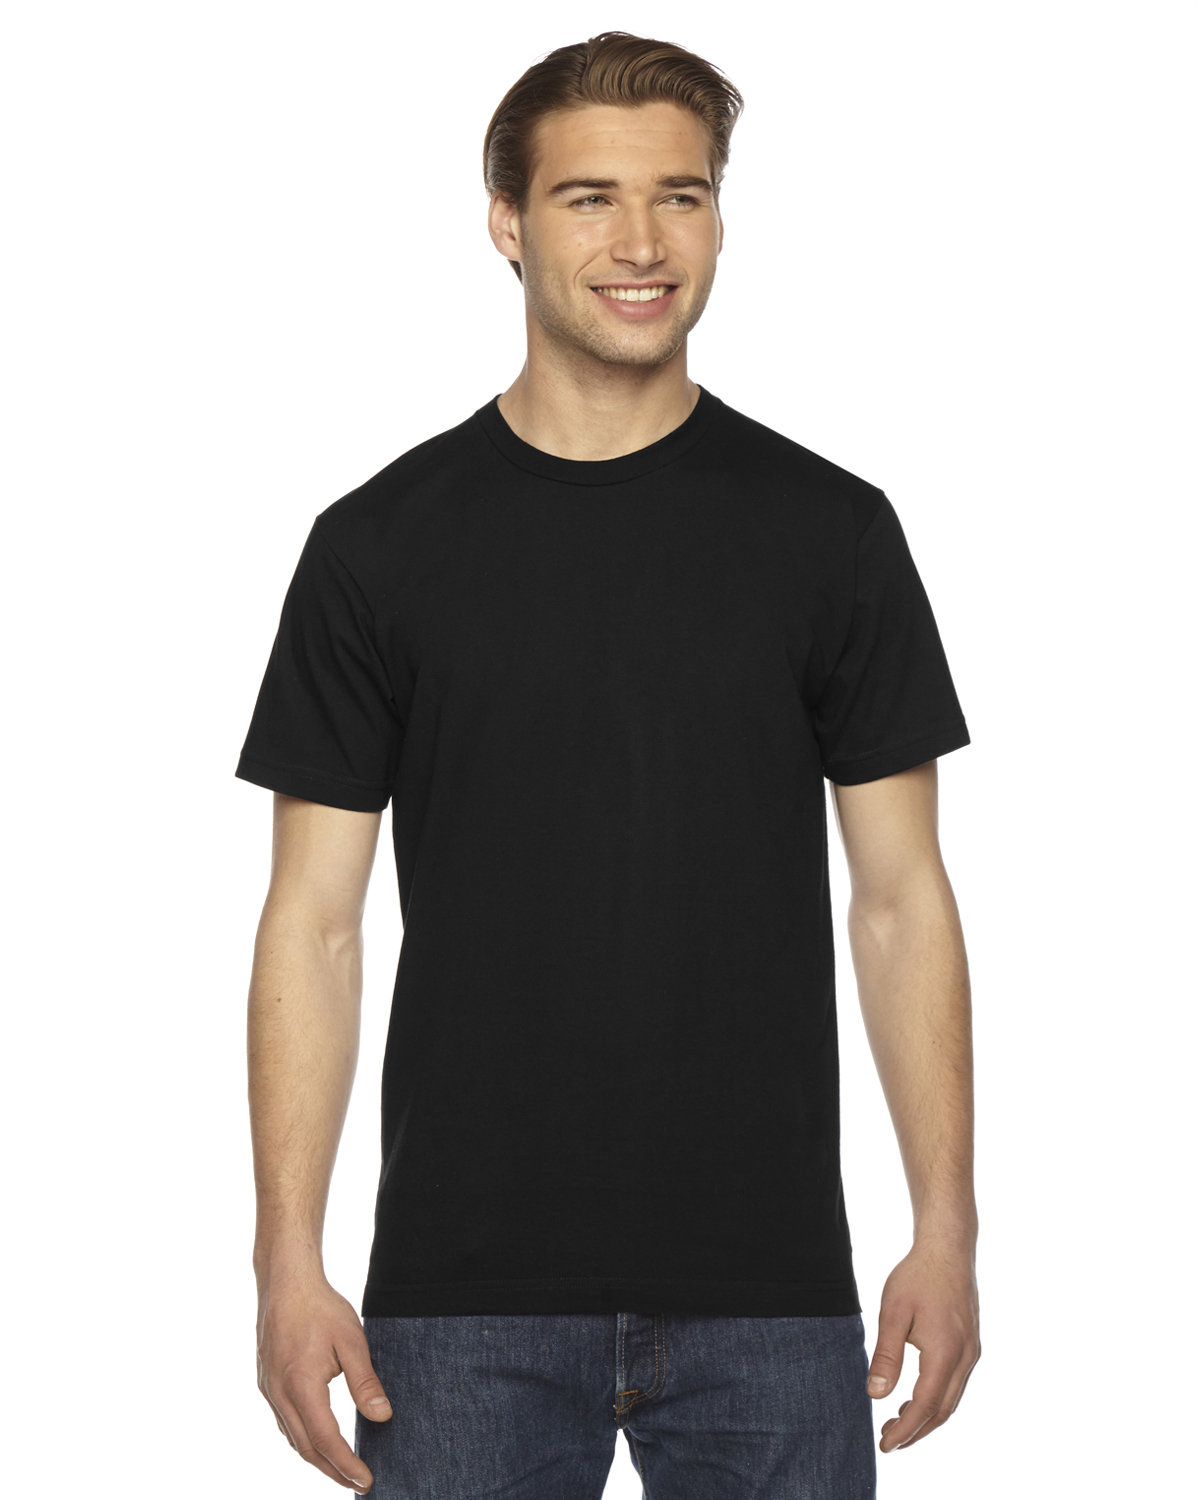 American Apparel Unisex Fine Jersey Short-Sleeve T-Shirt BLACK 